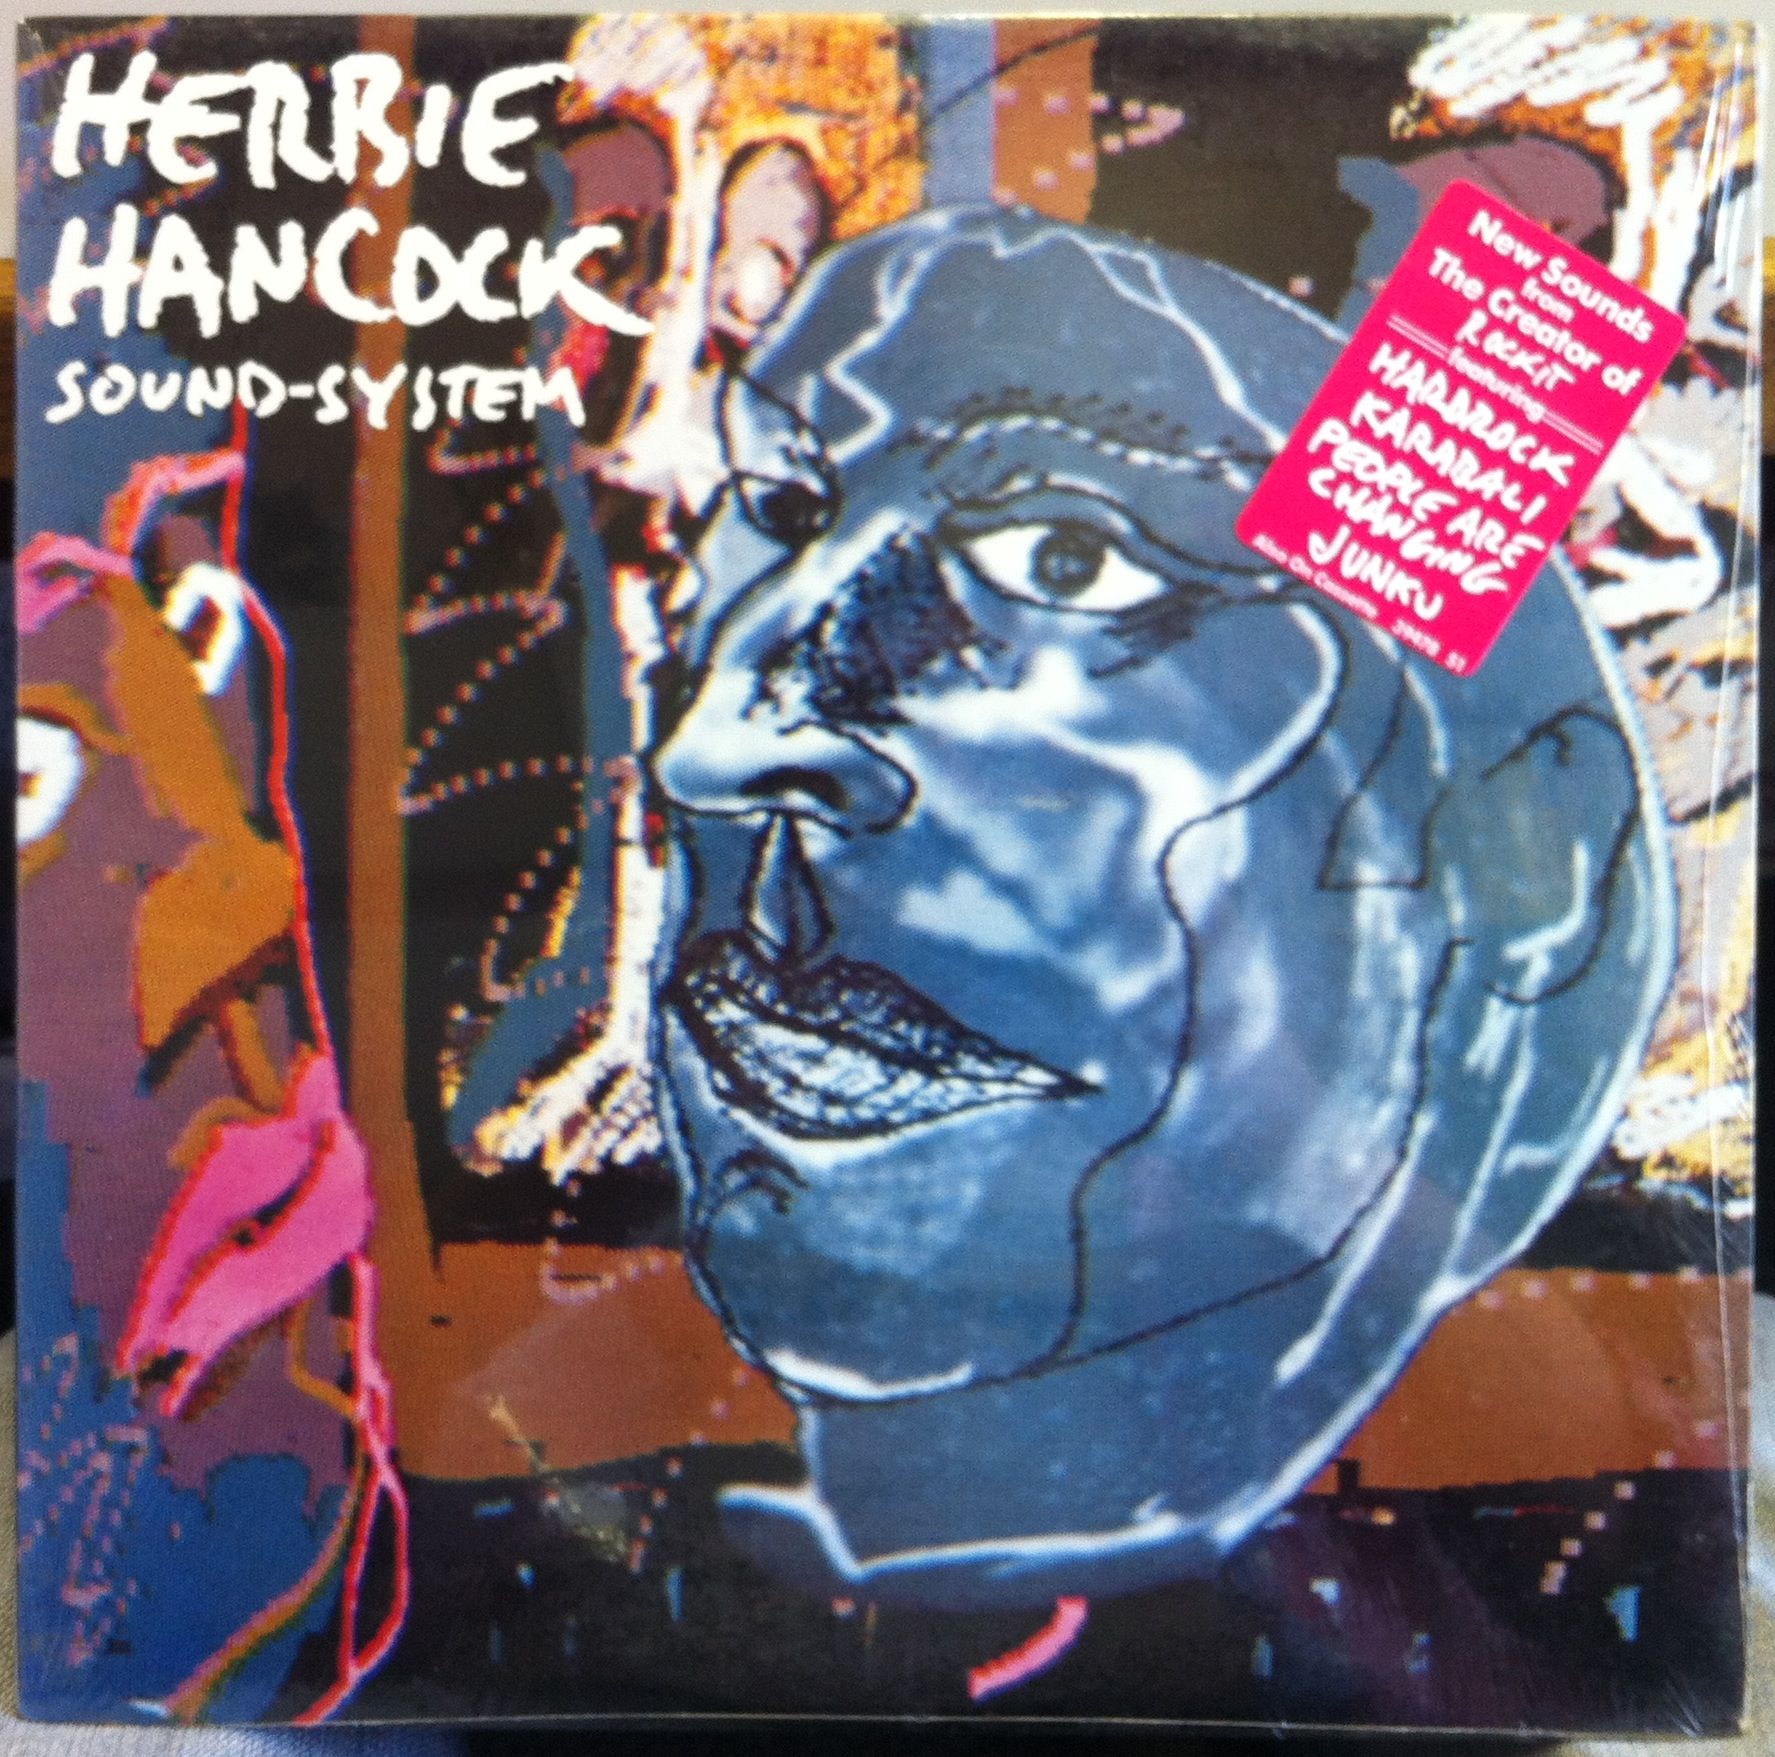 HERBIE HANCOCK sound system LP Sealed FC 39478 Vinyl 1984 Record